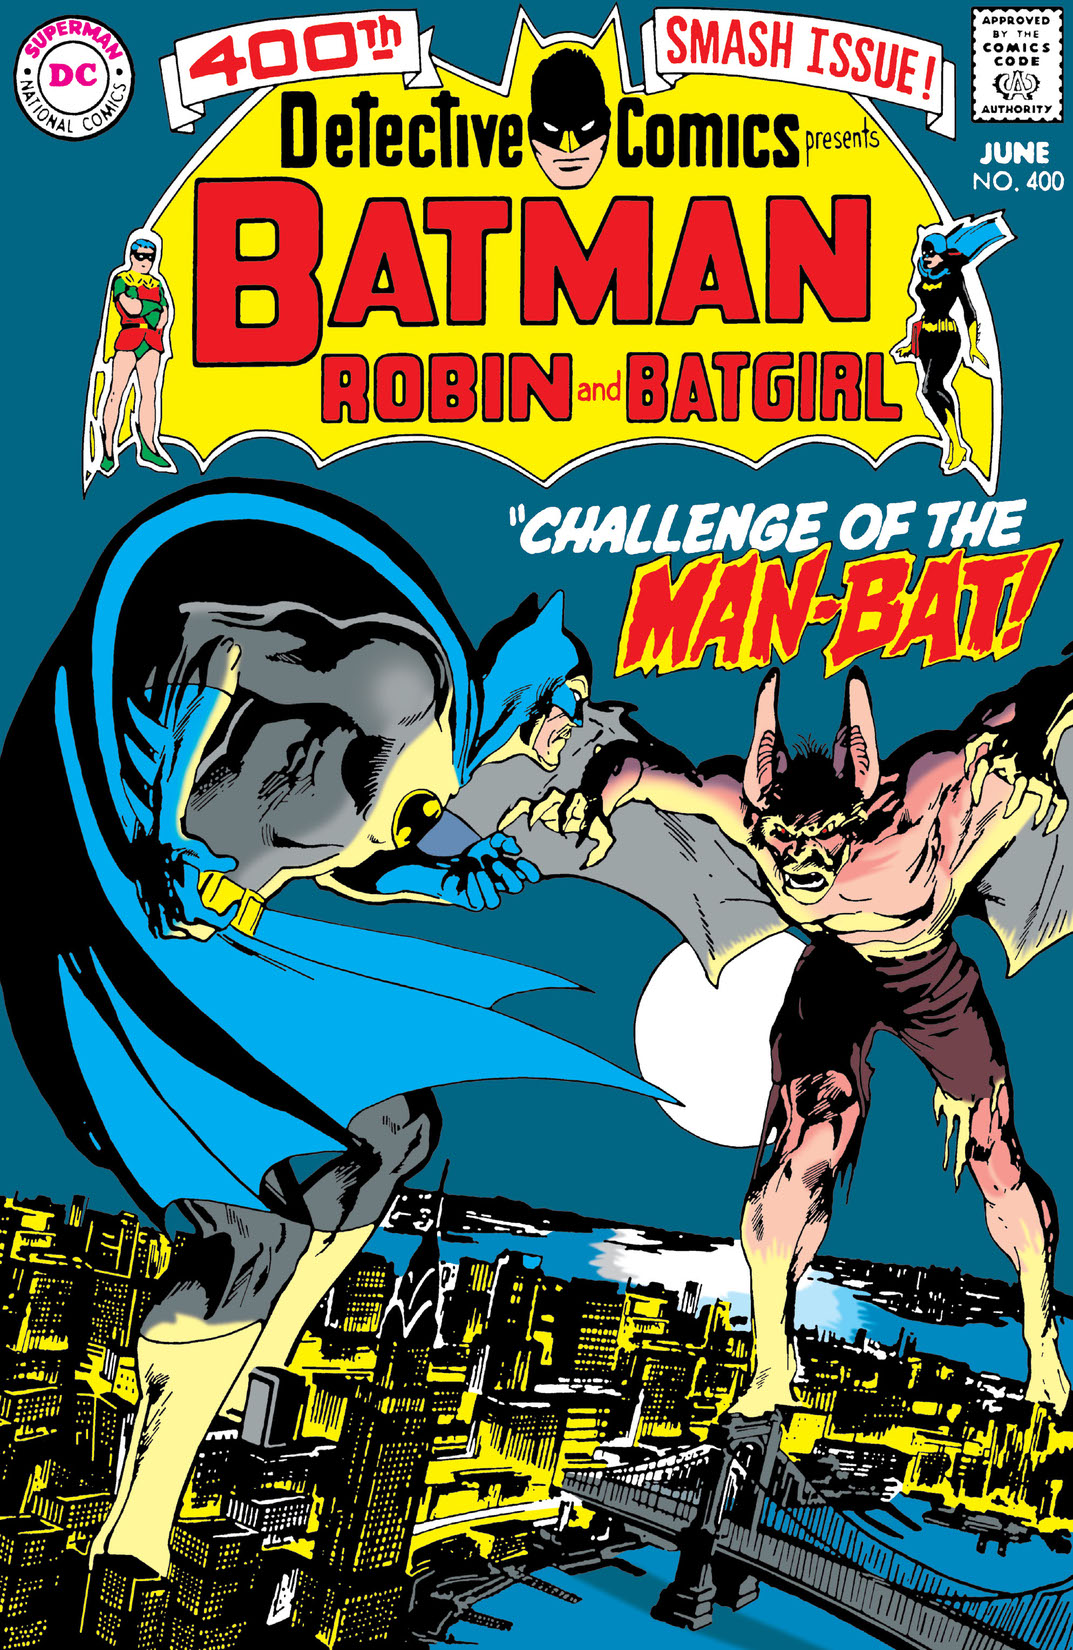 Detective Comics (1937-) #400 preview images